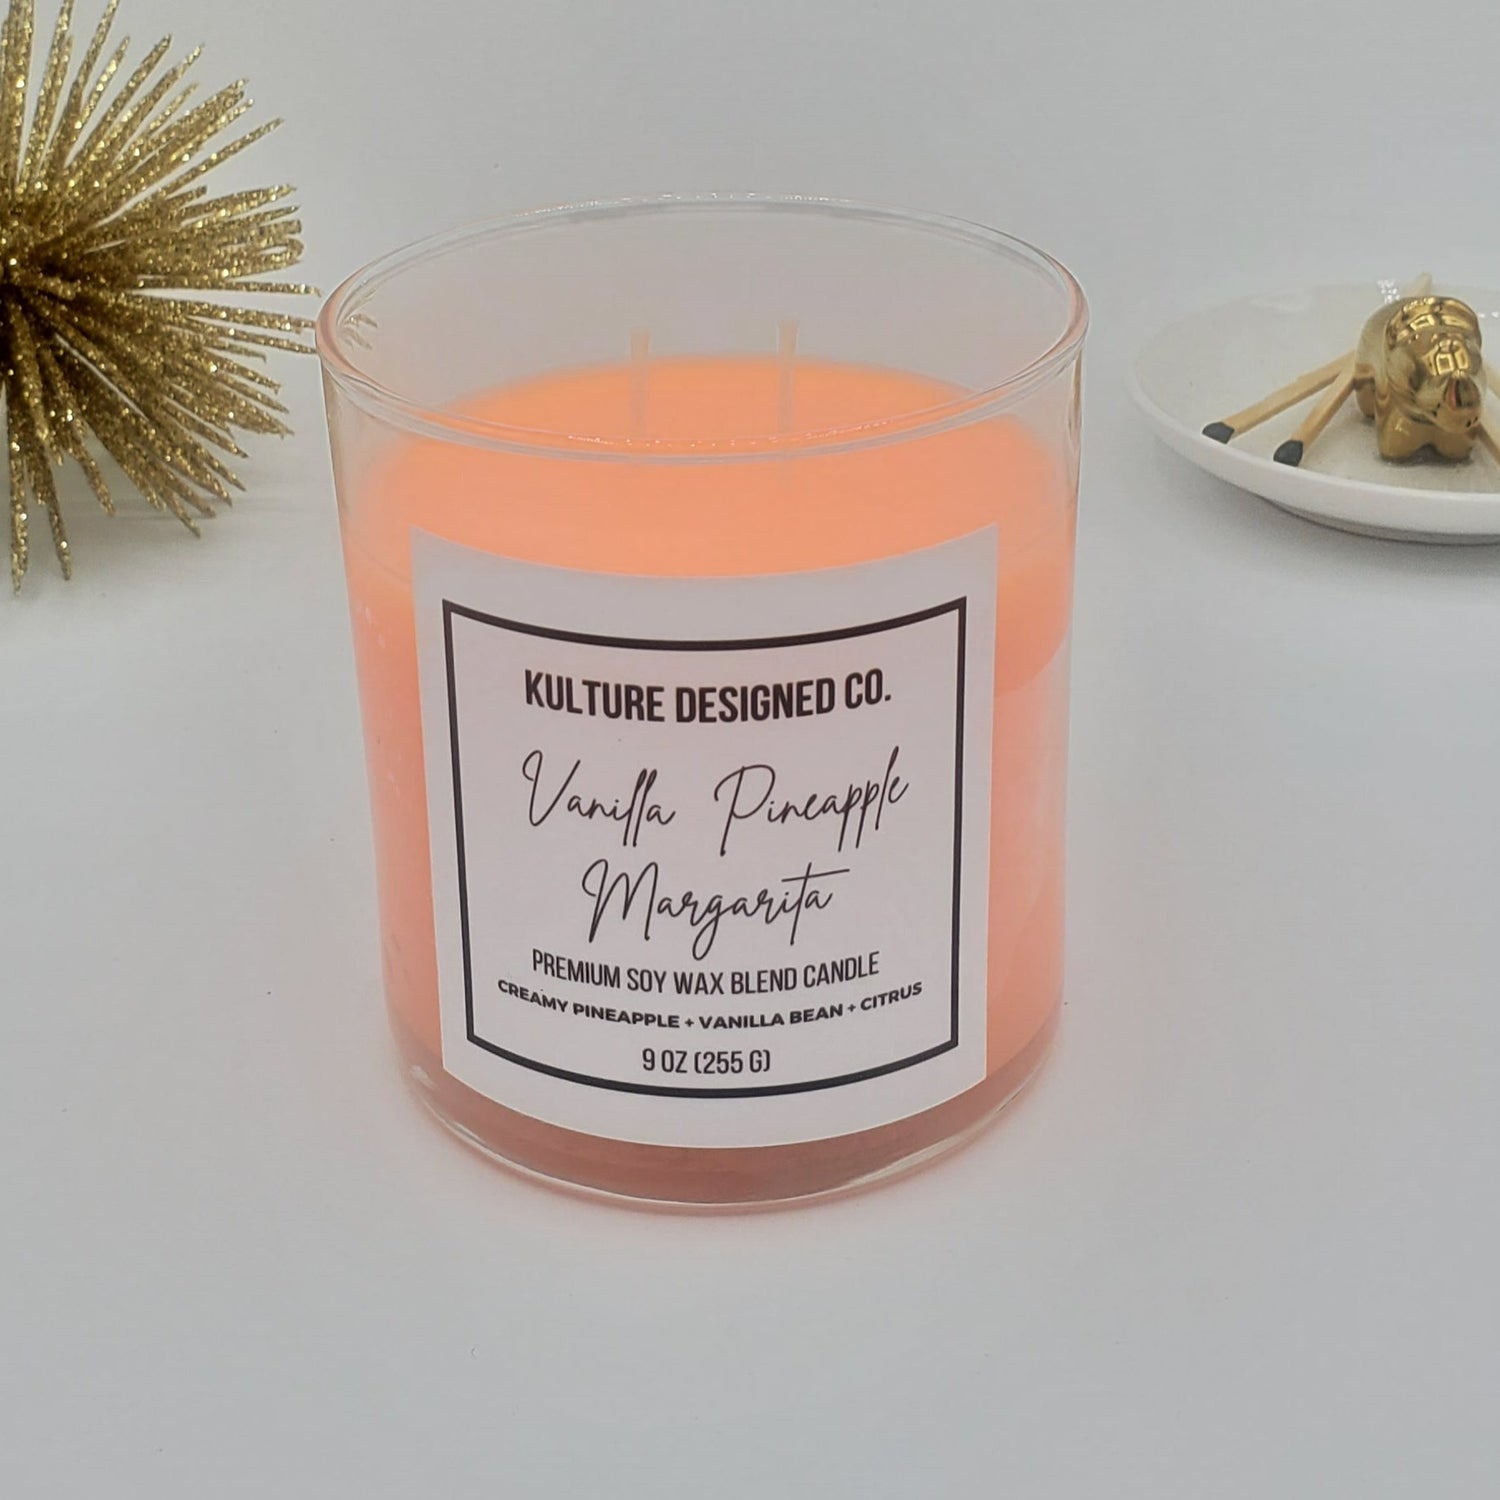 Vanilla Pineapple Margarita| 9 oz candle - Kulture Designed Co.